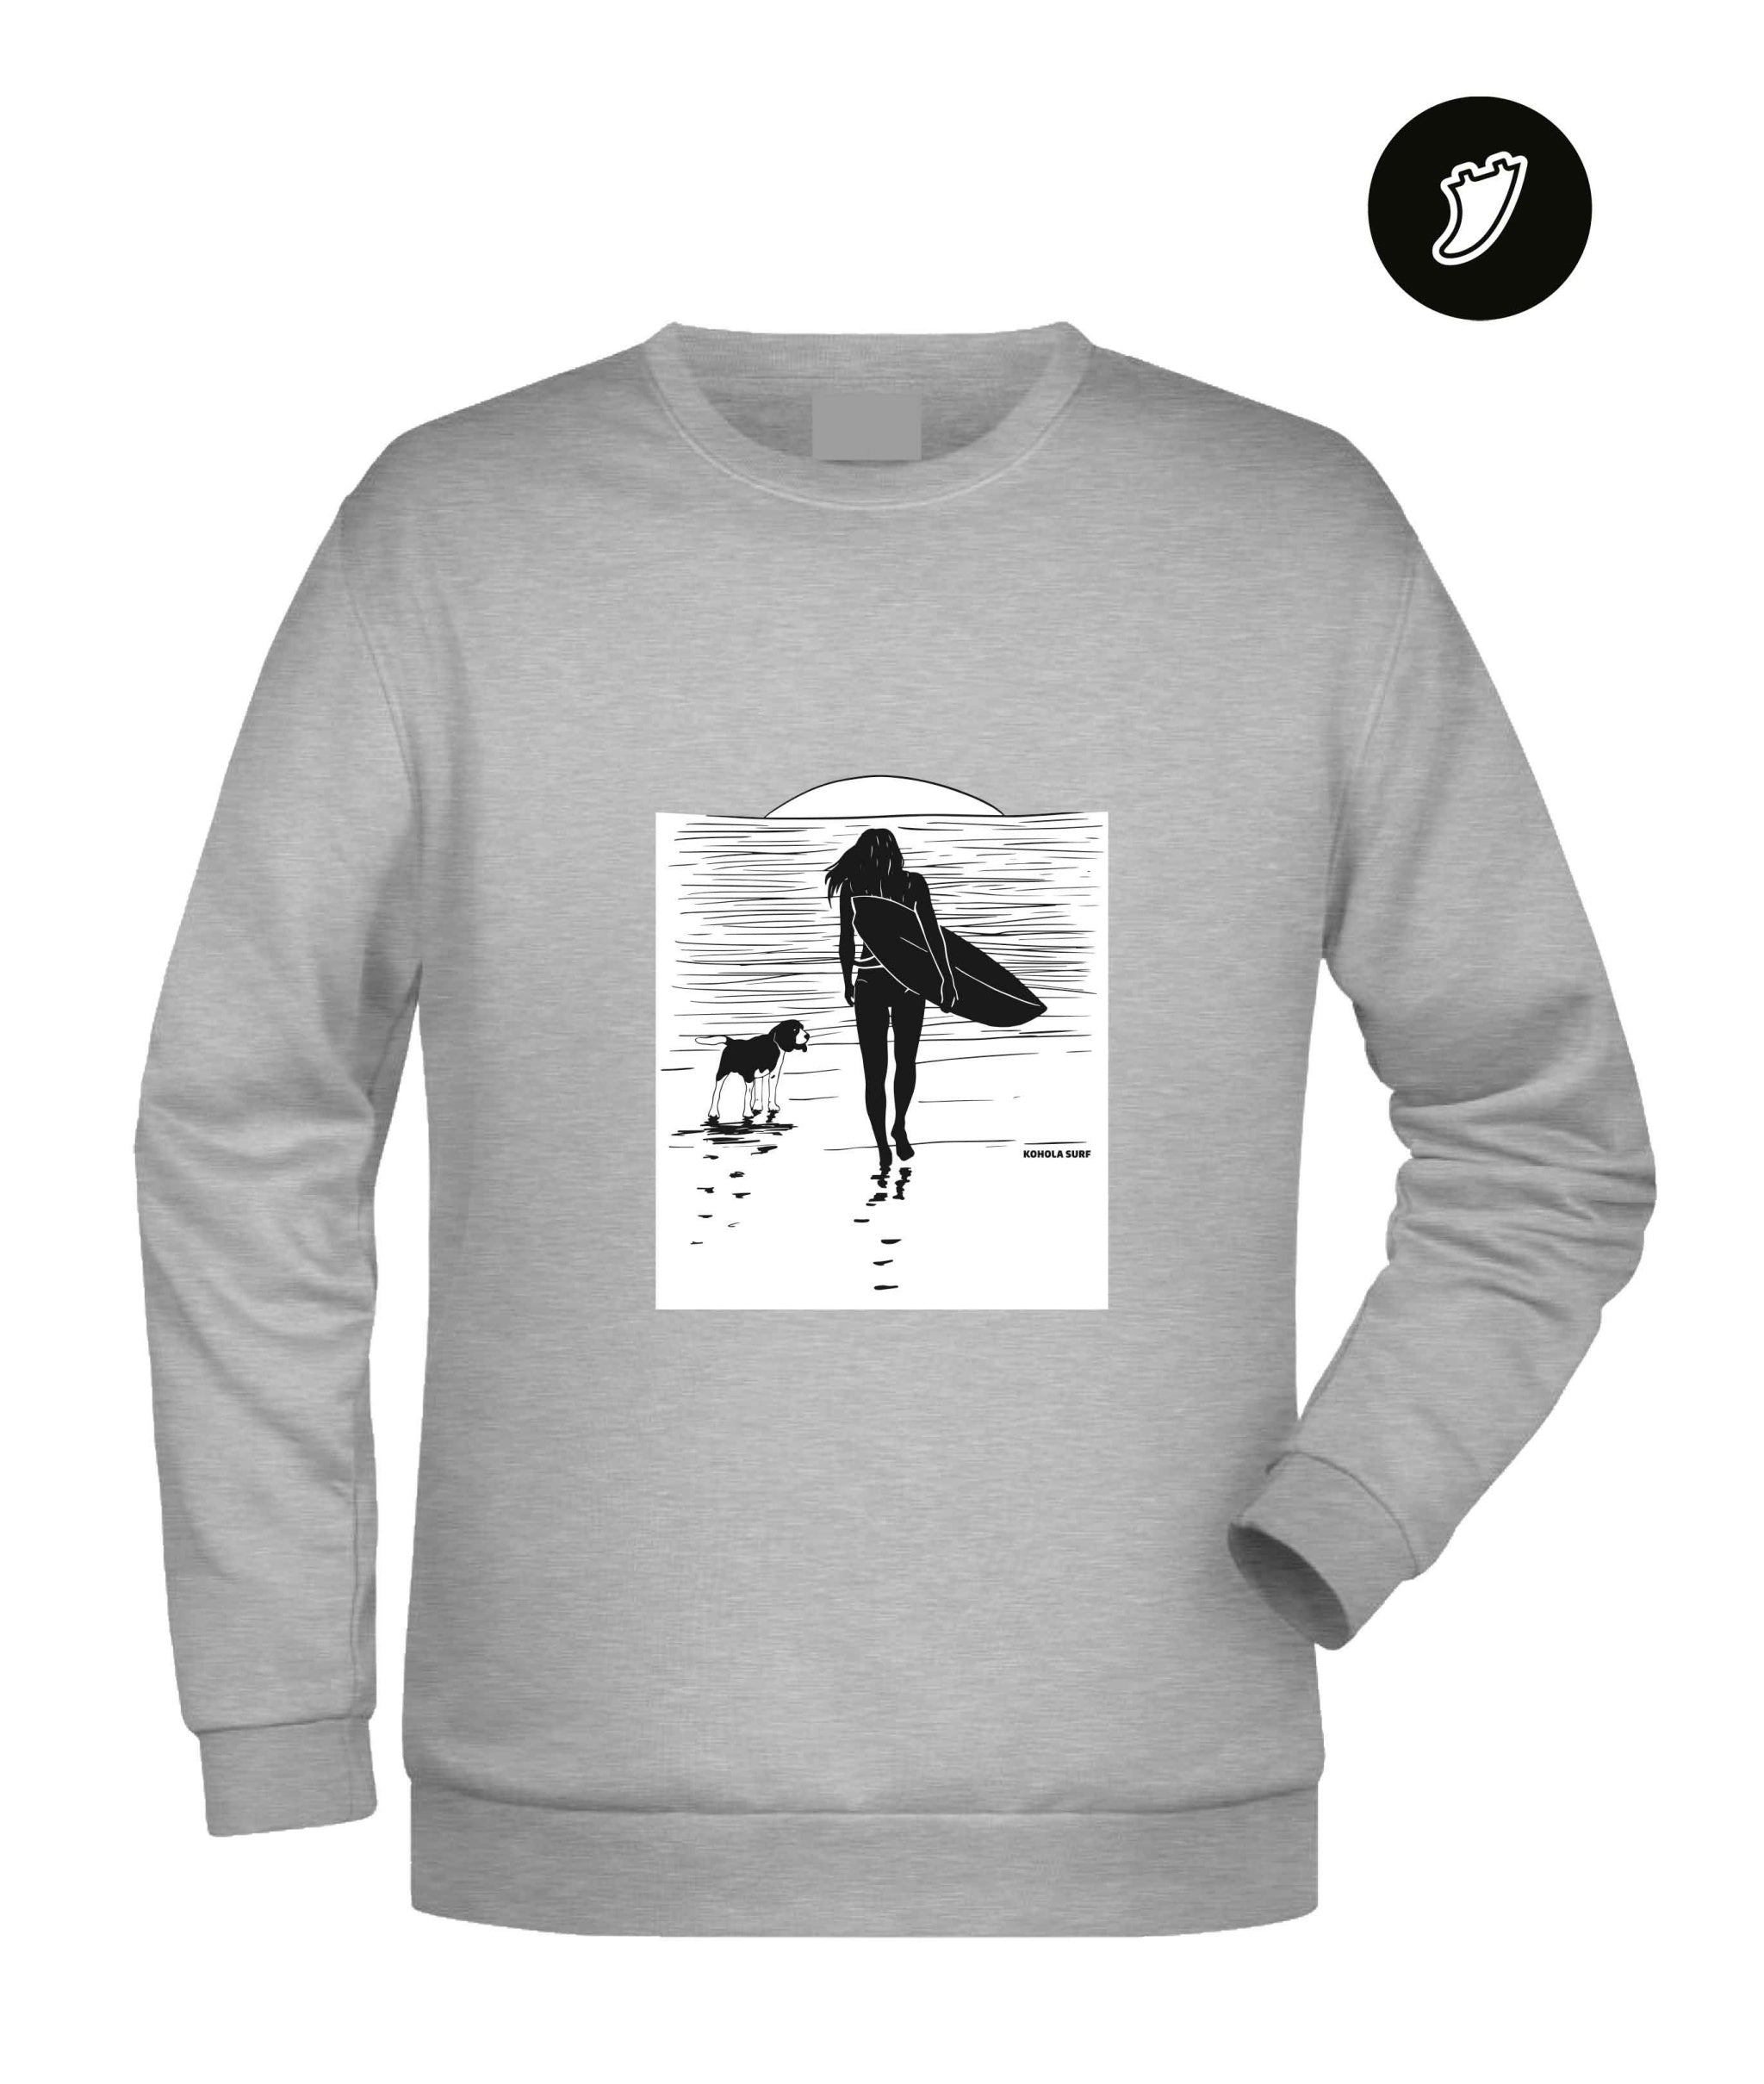 Surf Dog Unisex Sweatshirt